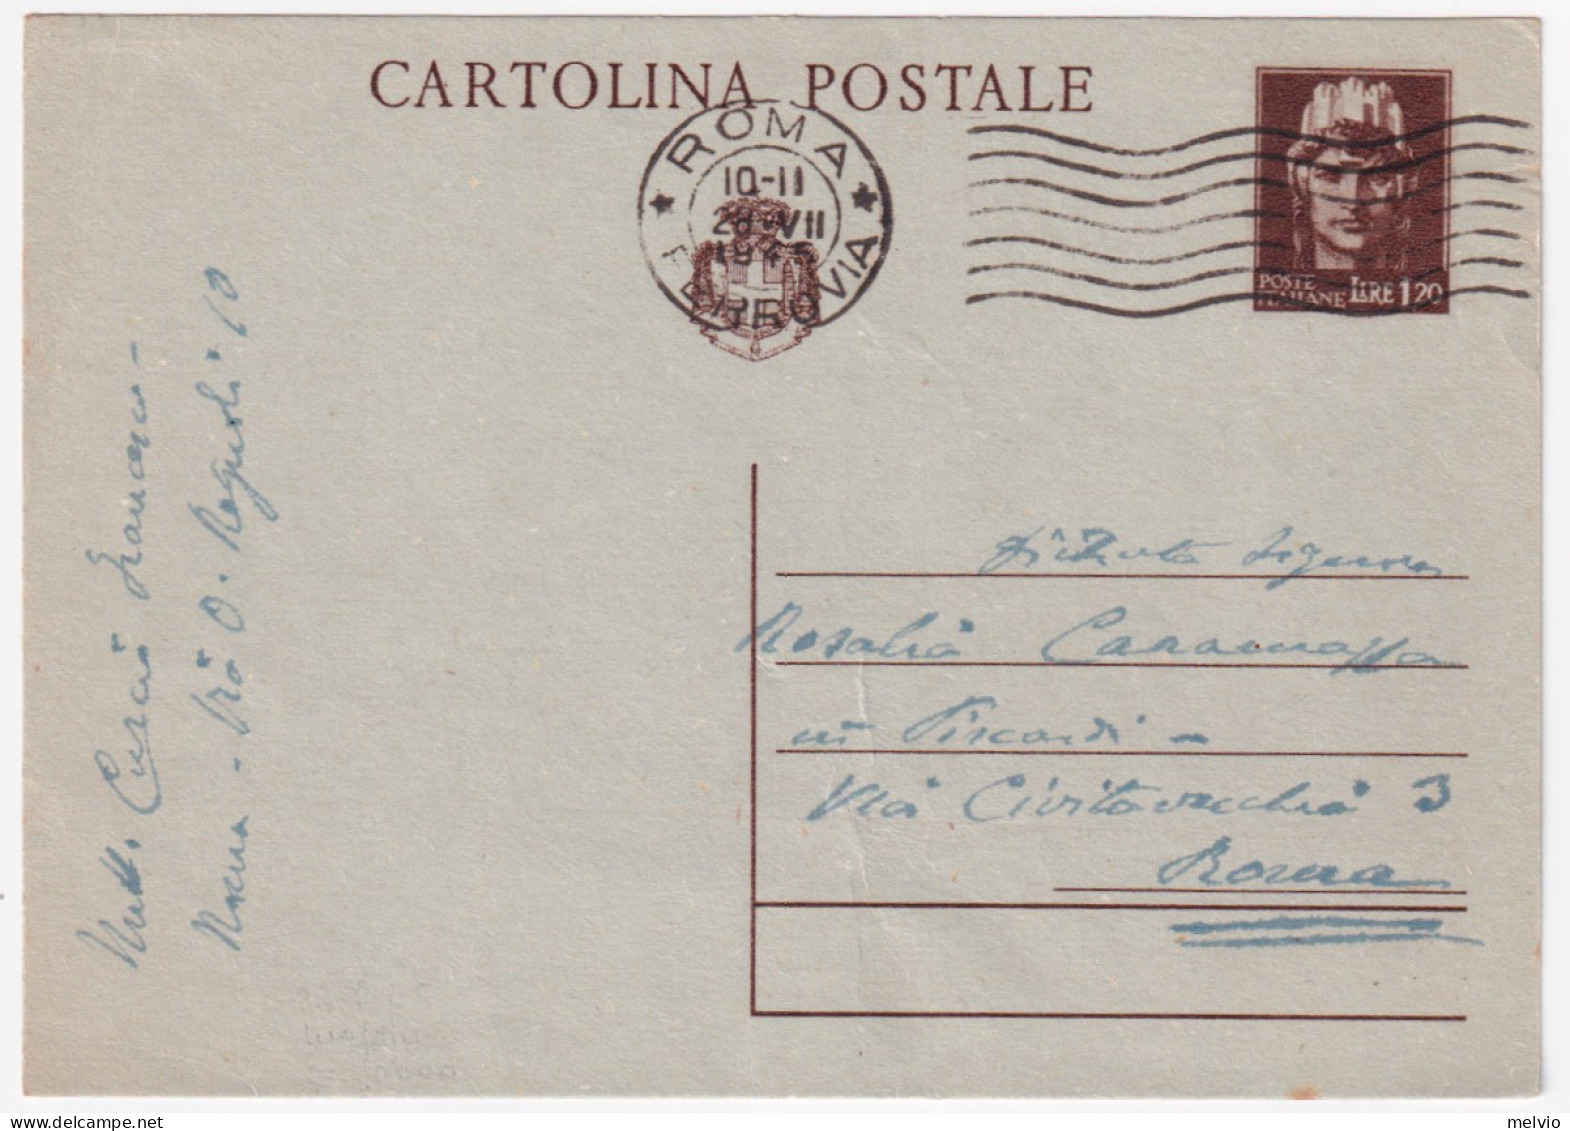 1945-Cartolina Postale Lire 1,20 Roma (28.7) - Marcophilia